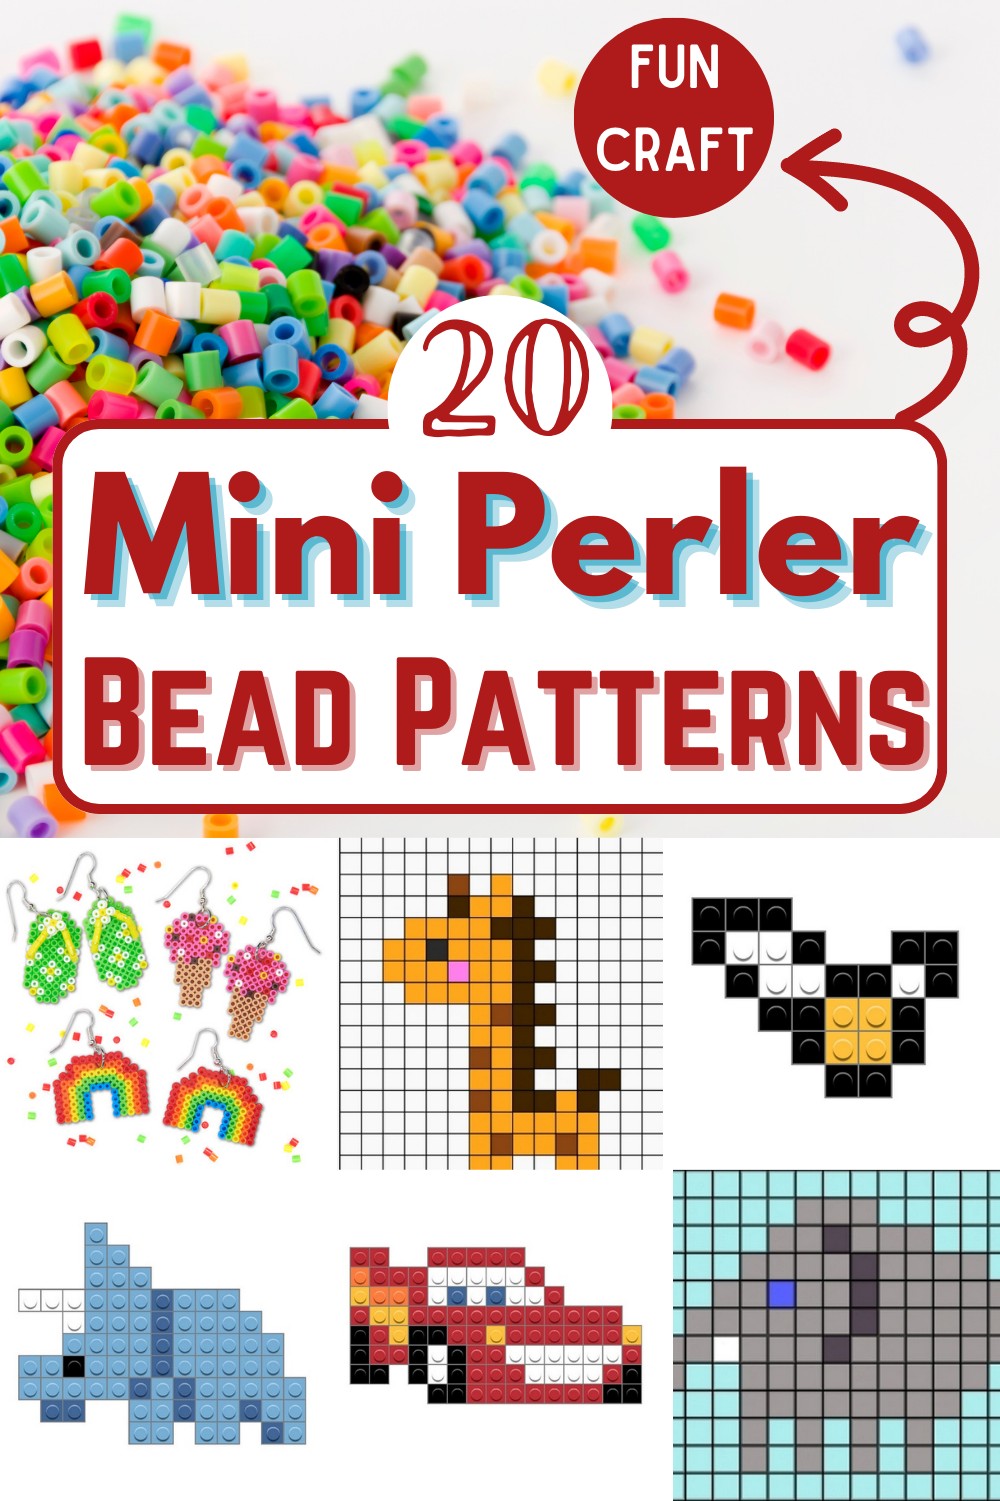 20 Mini Perler Bead Patterns For Fun Crafting